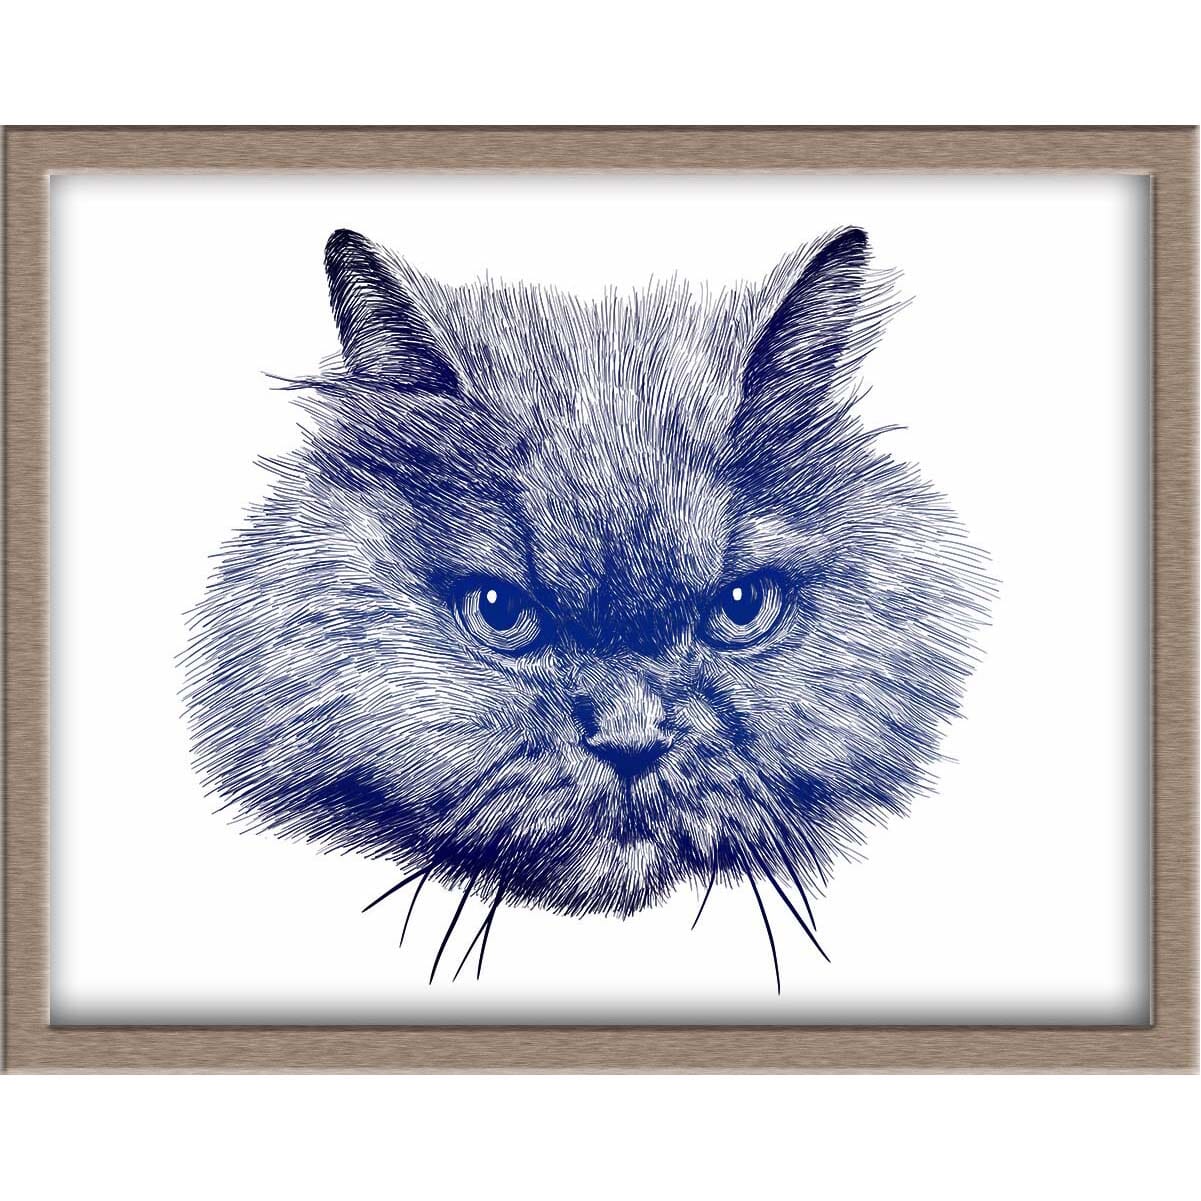 Persian Cat Foiled Print (Bibi) Posters, Prints, & Visual Artwork JoyousJoyfulJoyness 